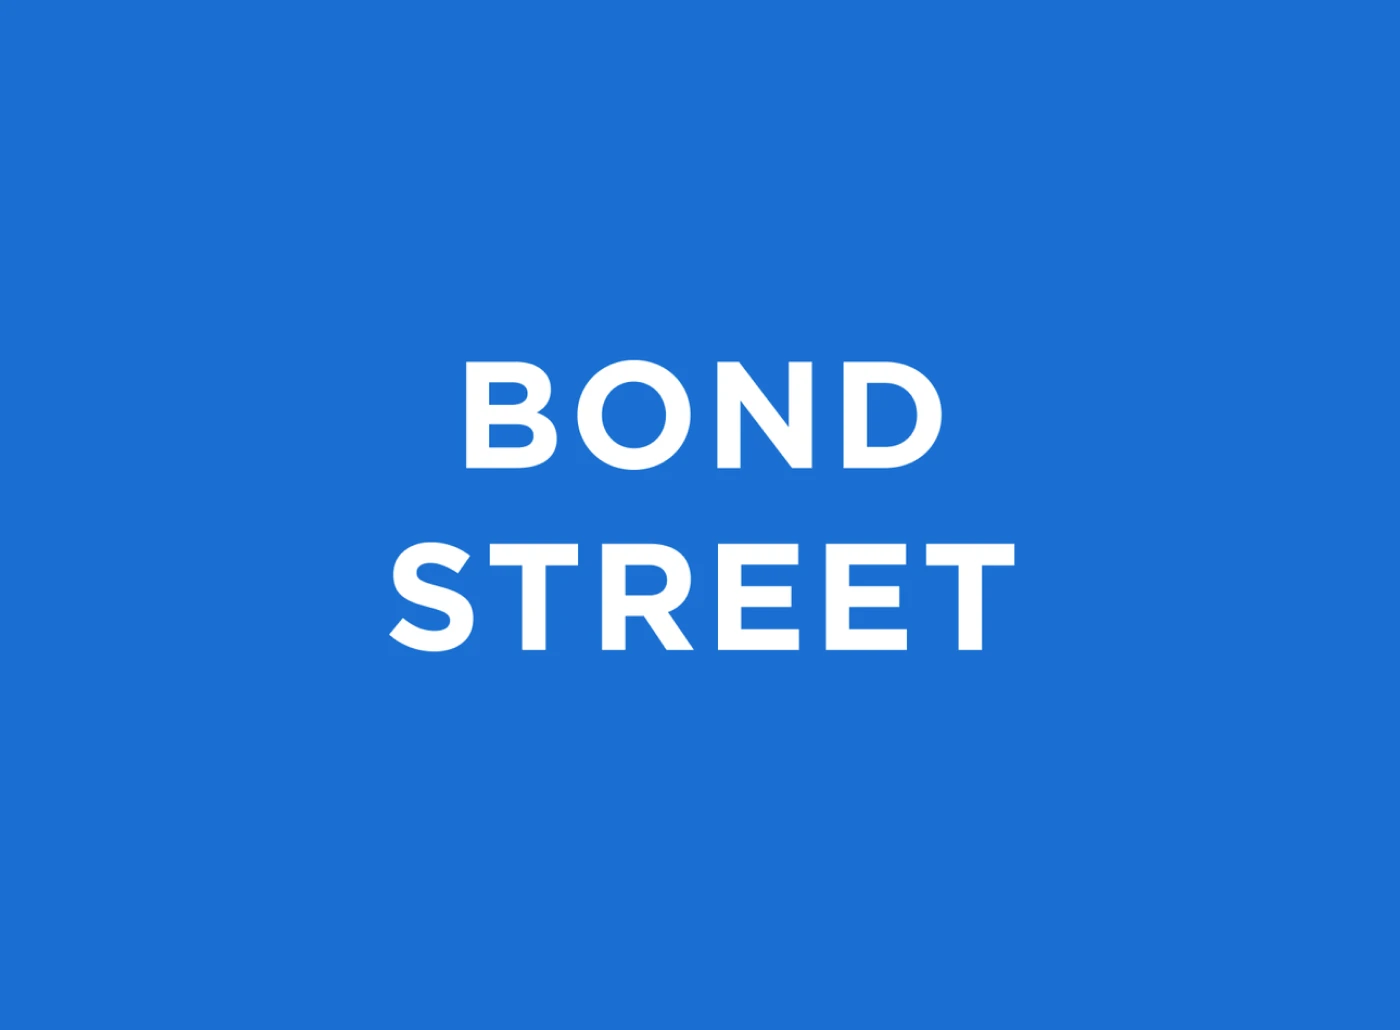 Bond Street's headshot